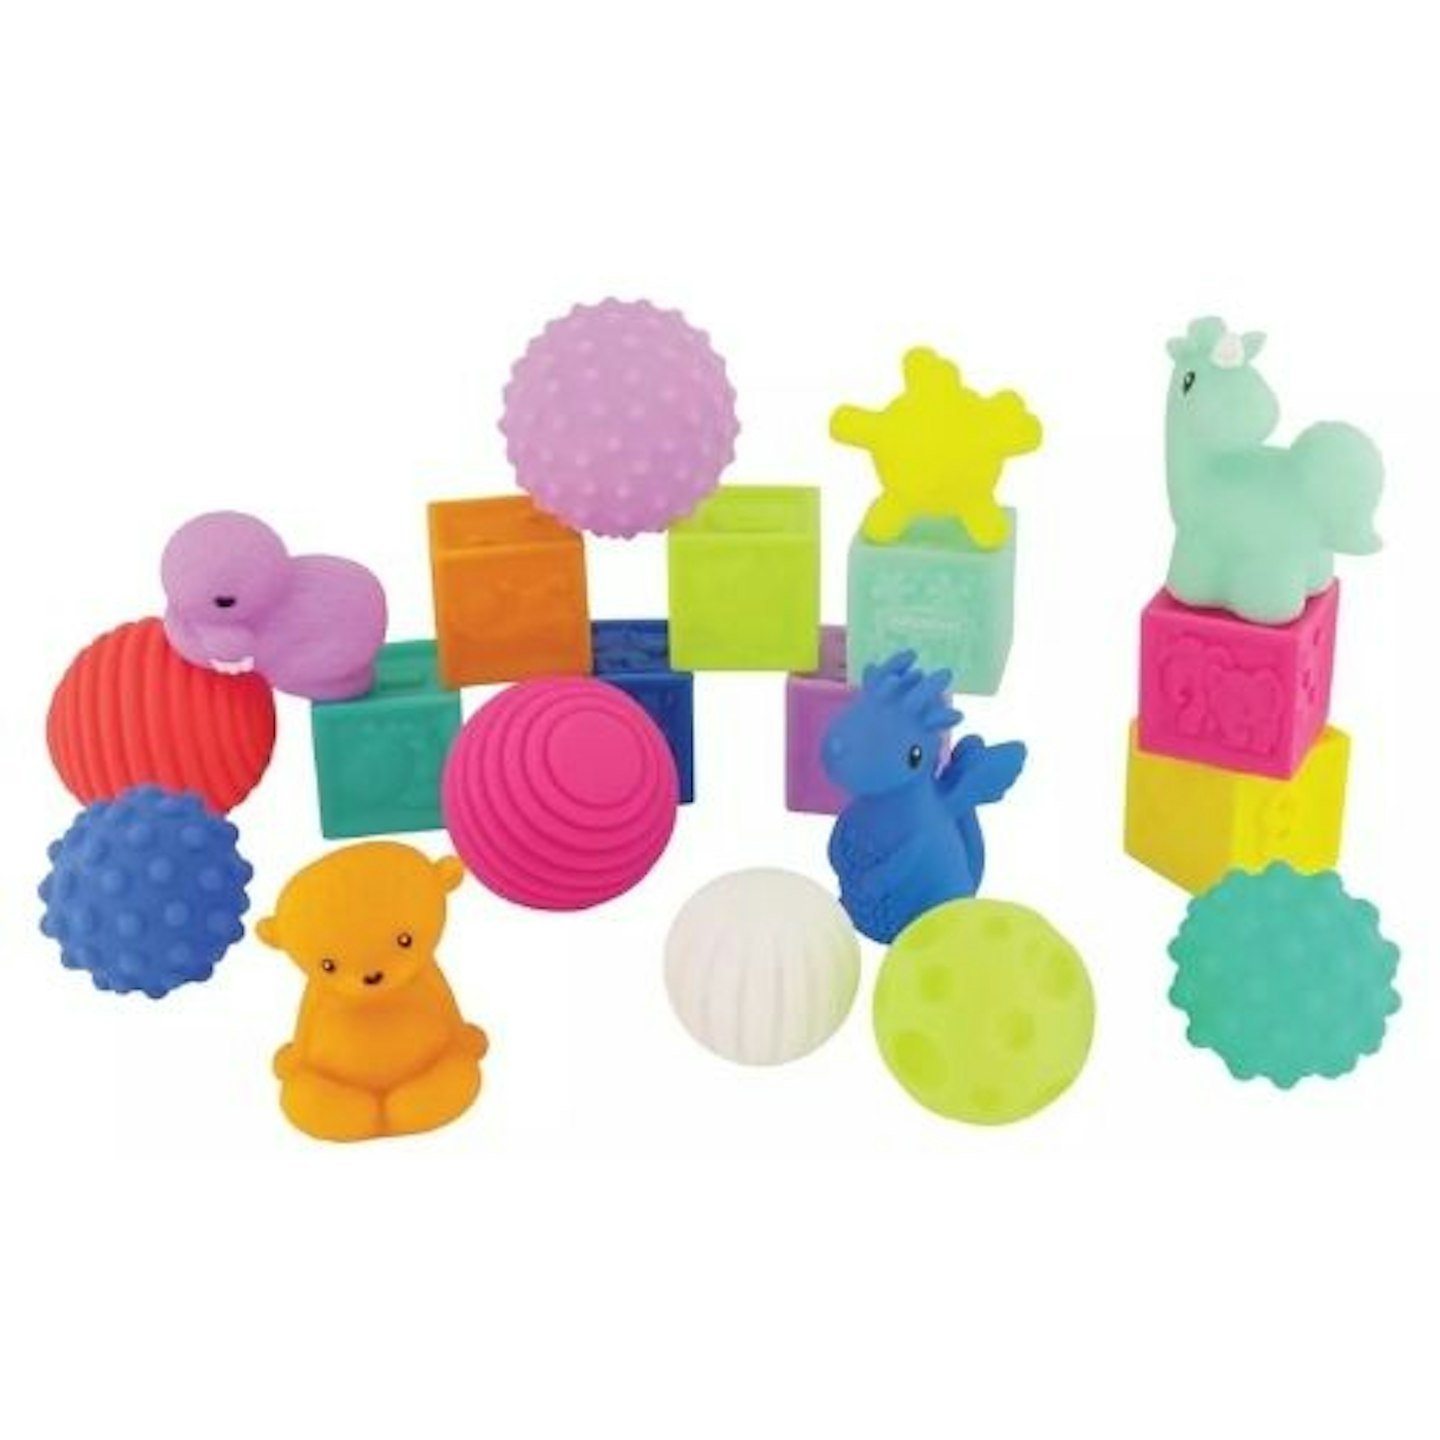 Infantino Playtime Pals & Sensory Shapes Activity Toy Set